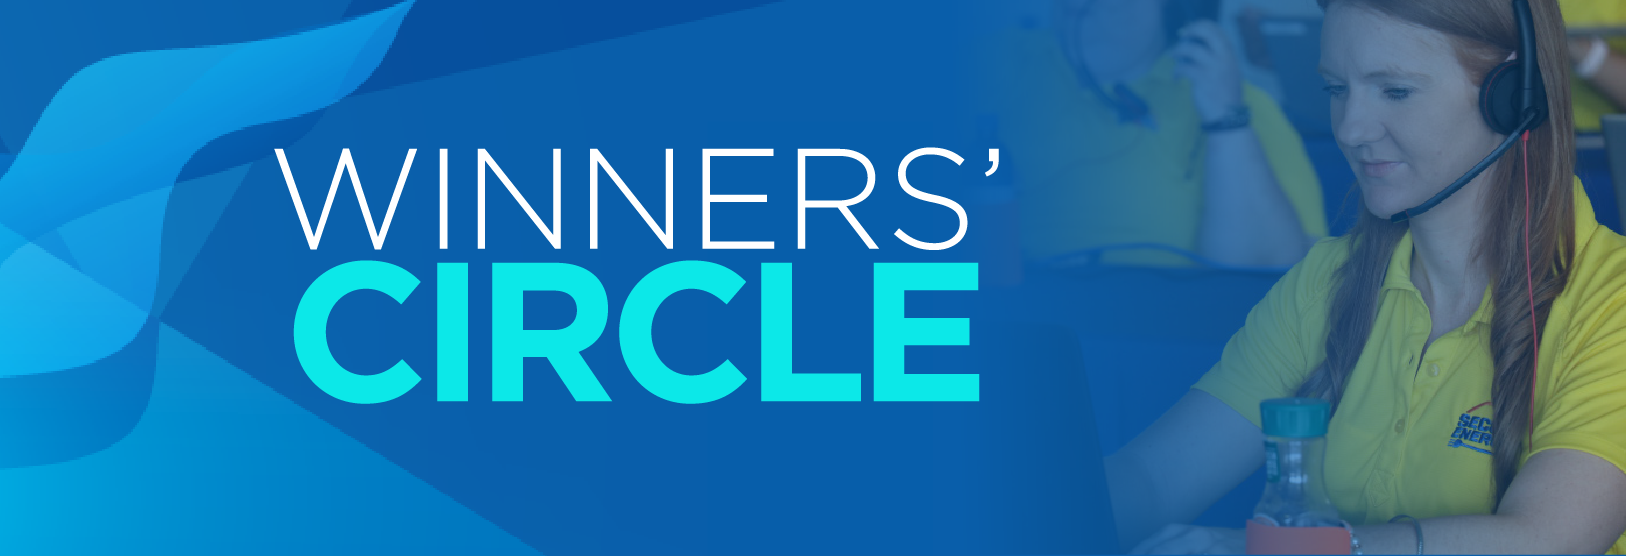 SECO News June 2020 Winners' Circle